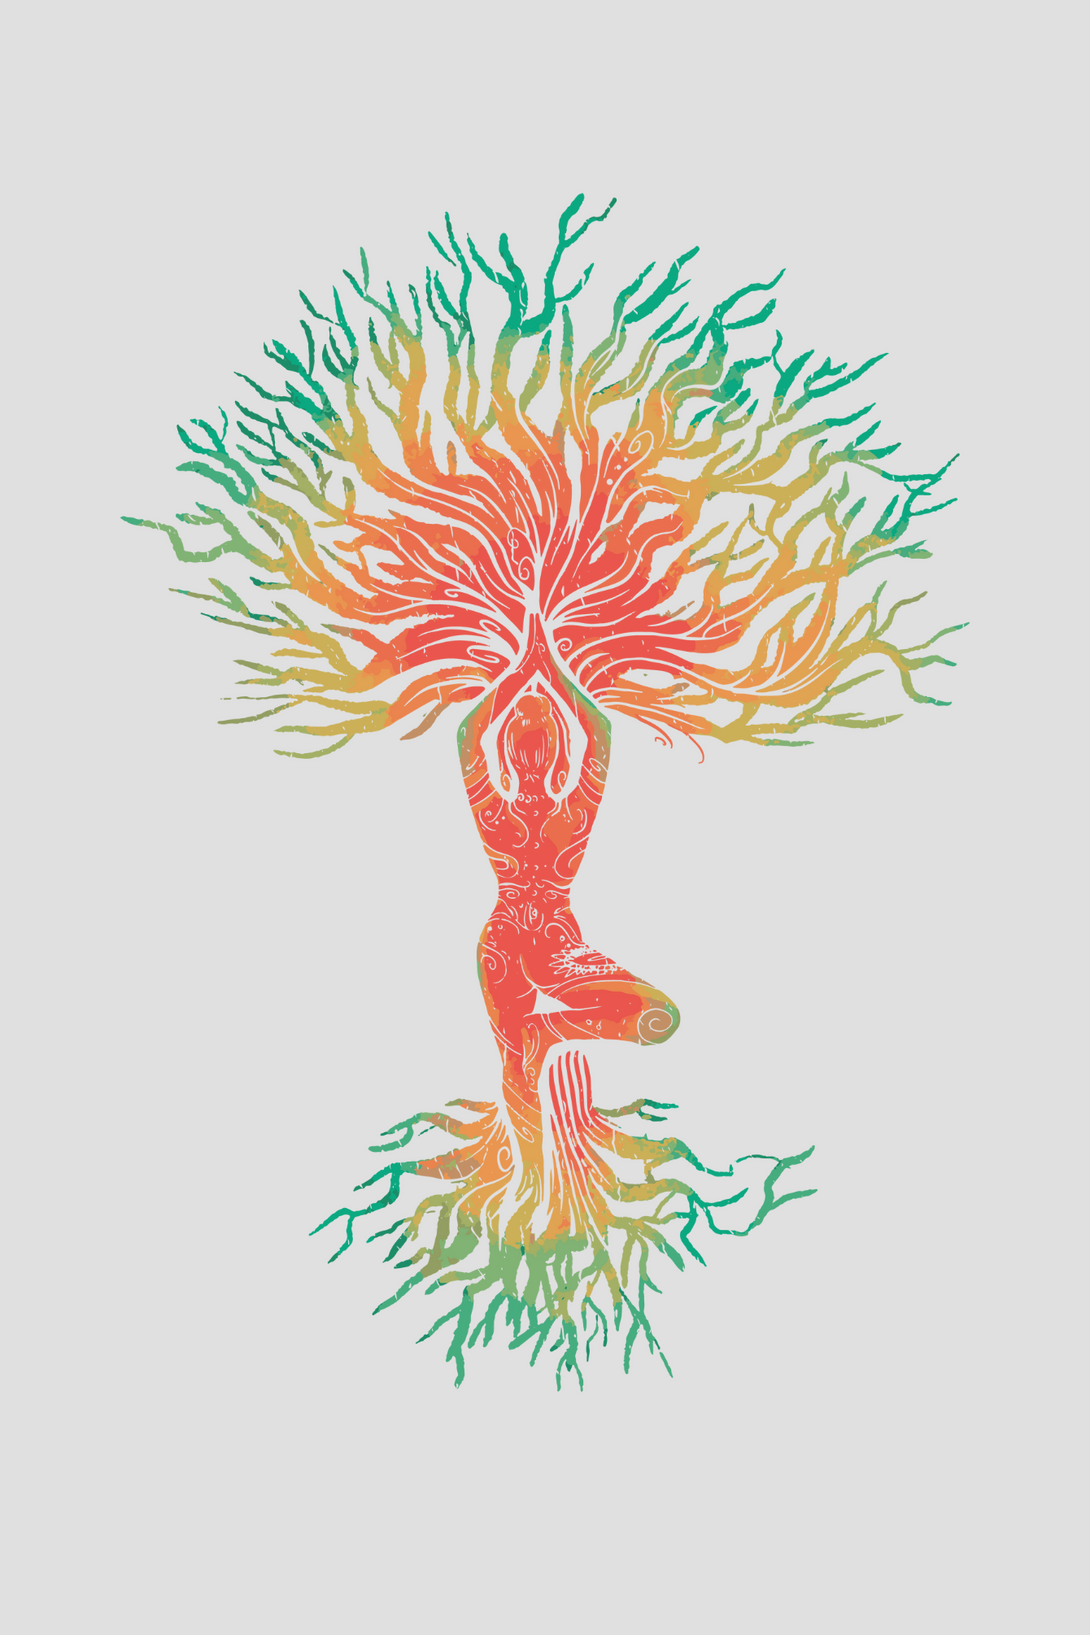 Yoga Tree Printed T-Shirt For Women - WowWaves - 1